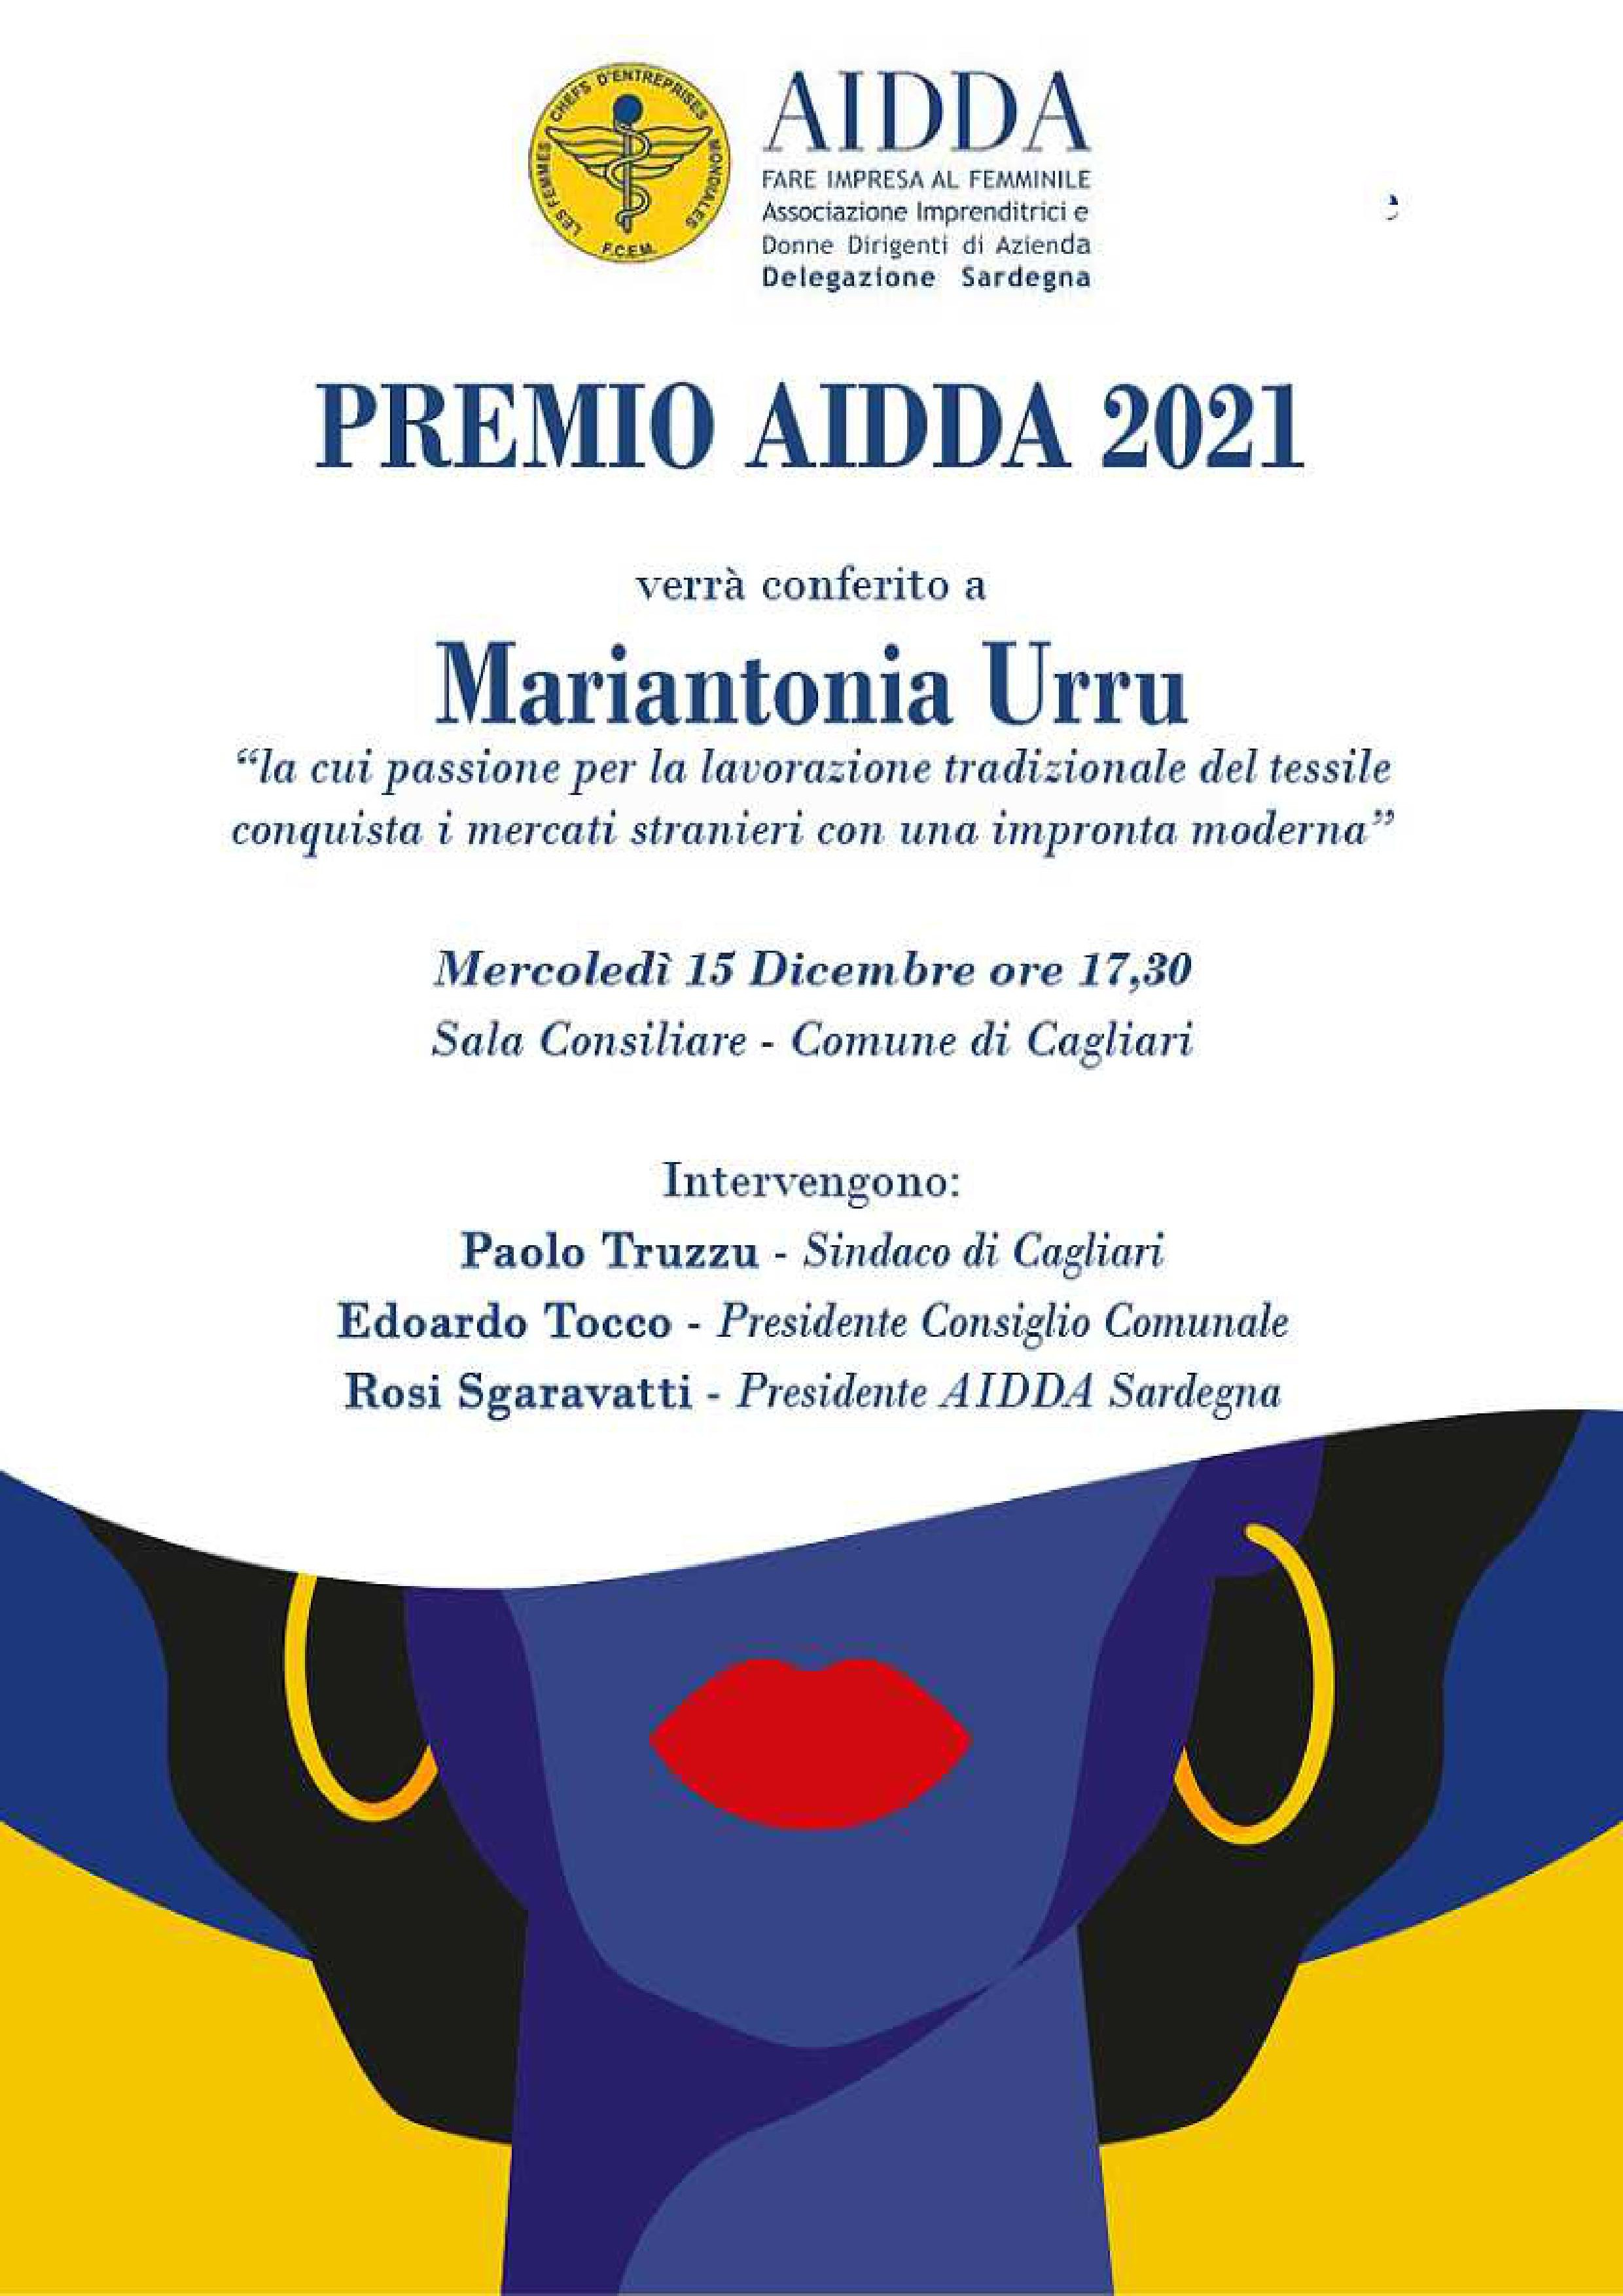 PREMIO AIDDA Sardegna 2021.jpg